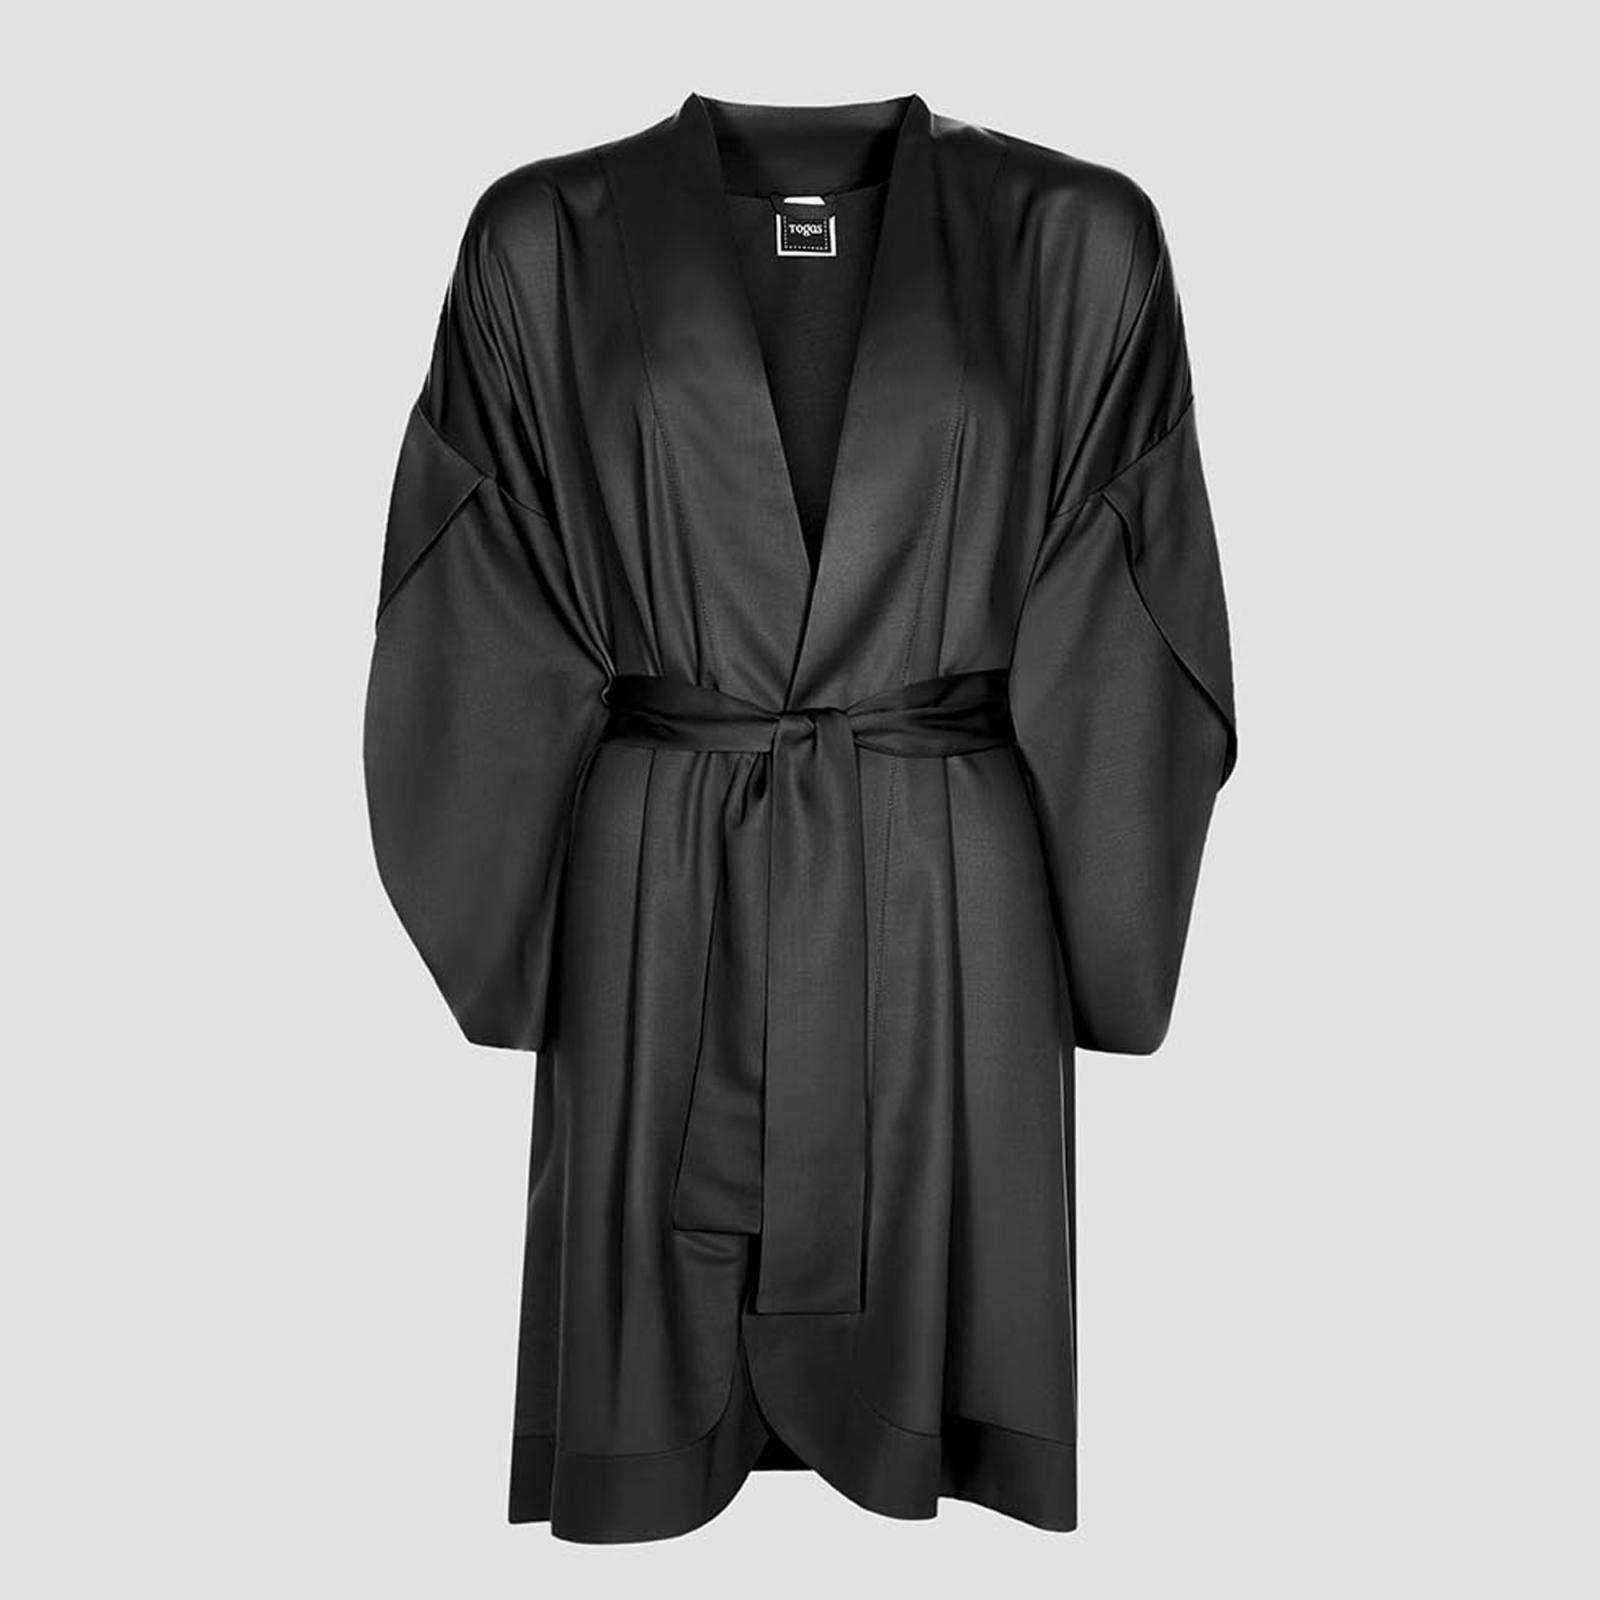 Халат-кимоно короткое Togas Наоми чёрное XL (50) халат кимоно короткое togas наоми чёрное м 46